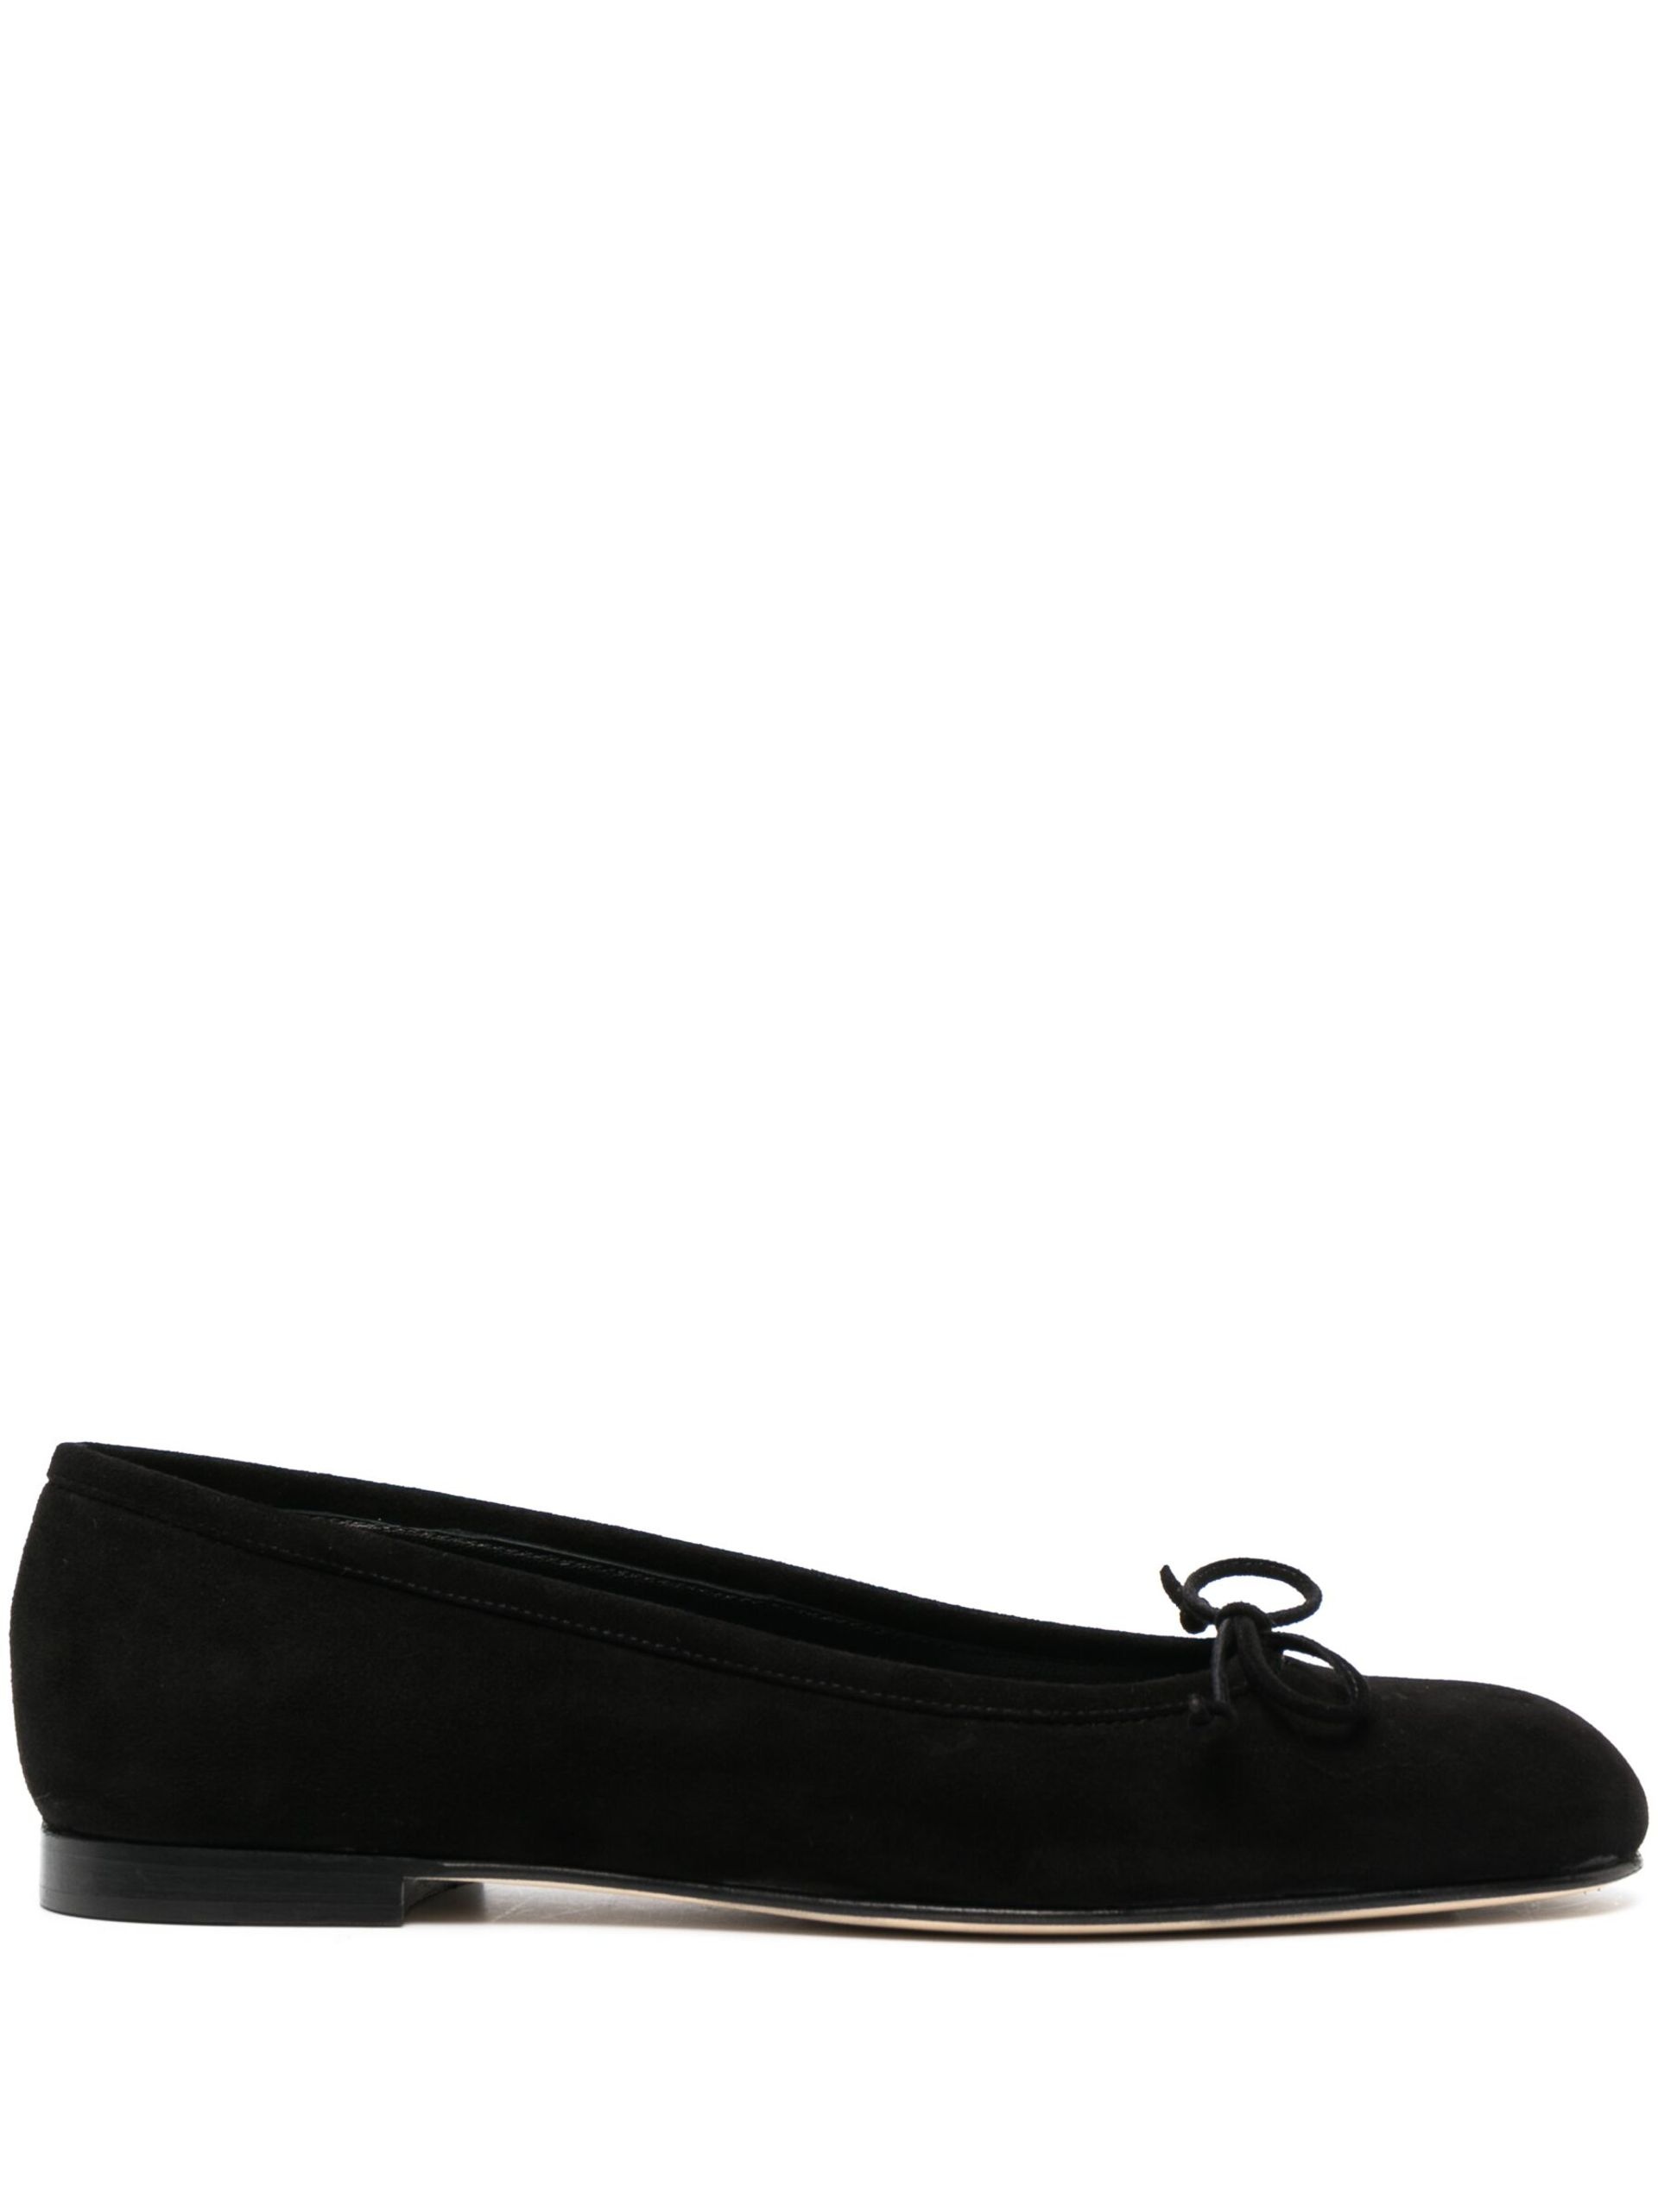 Black Veralli Leather Ballerina Shoes - 1